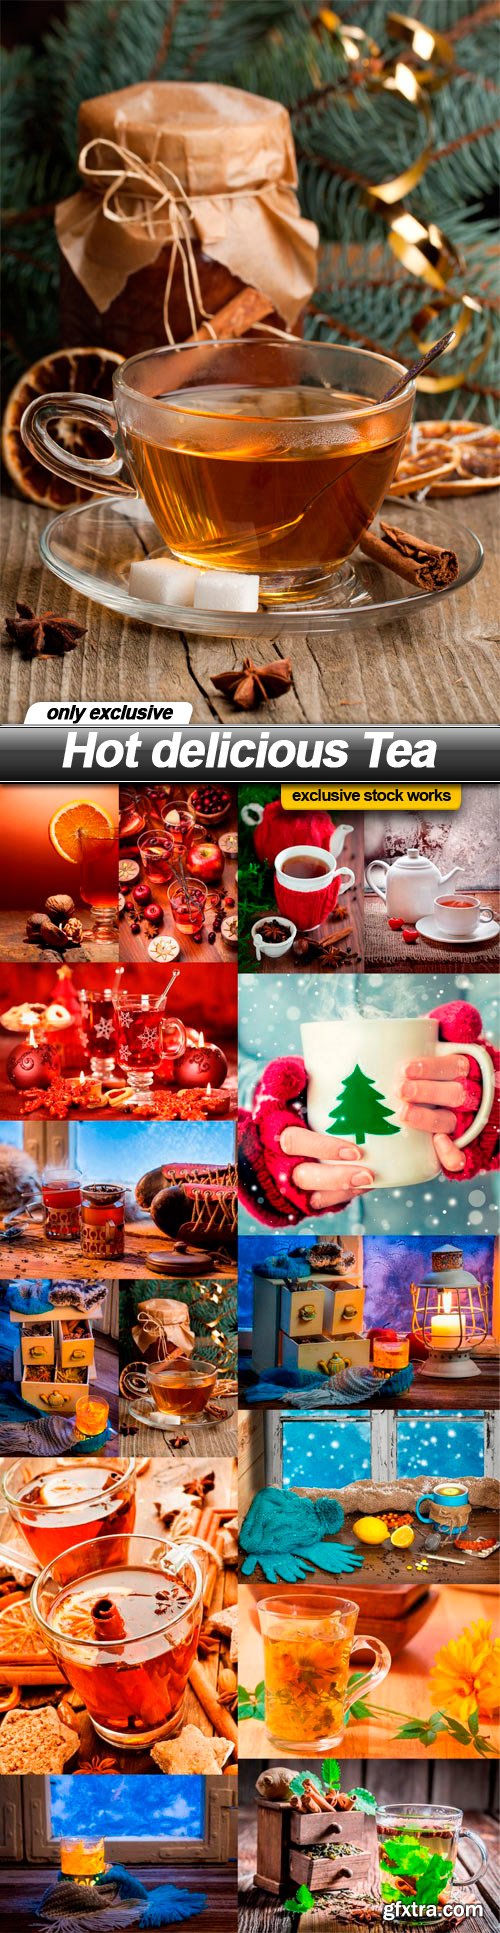 Hot delicious Tea - 15 UHQ JPEG